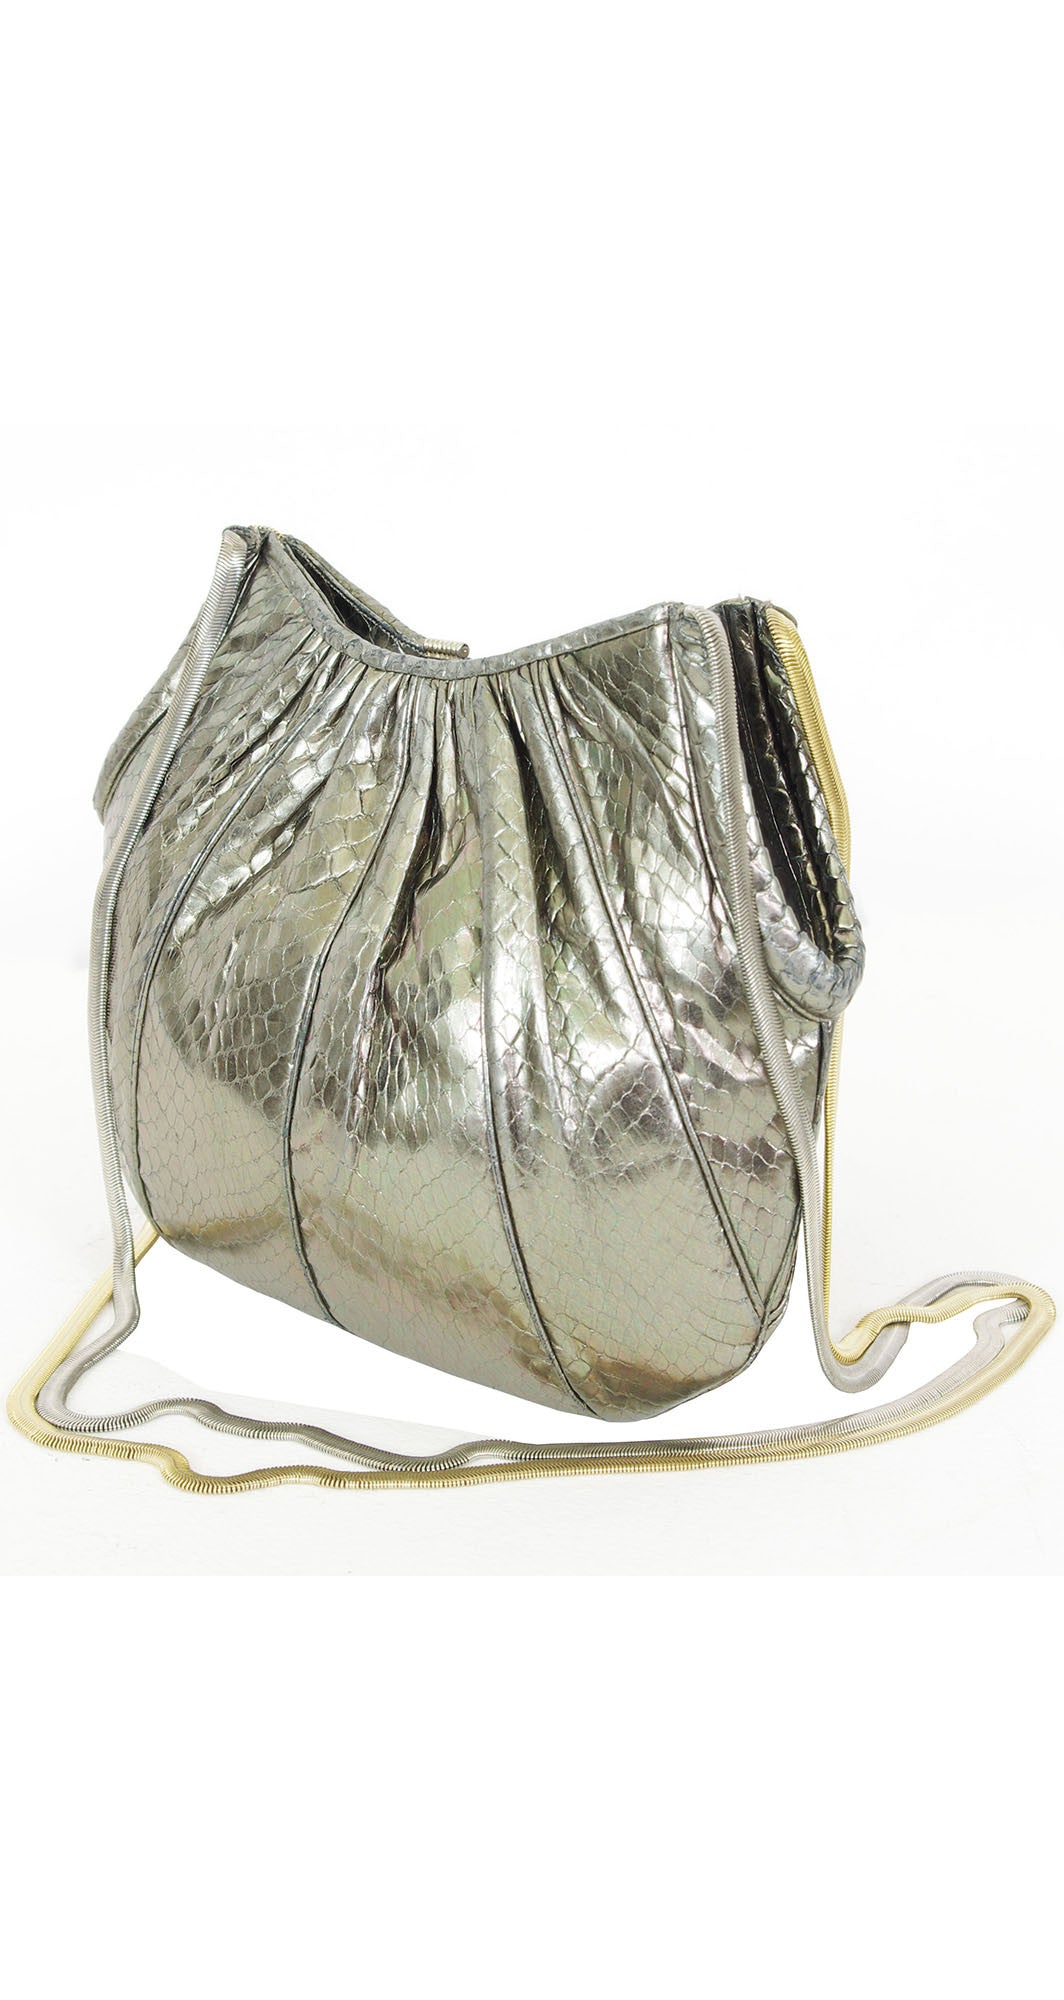 1980s Silver Metallic Snakeskin Evening Bag